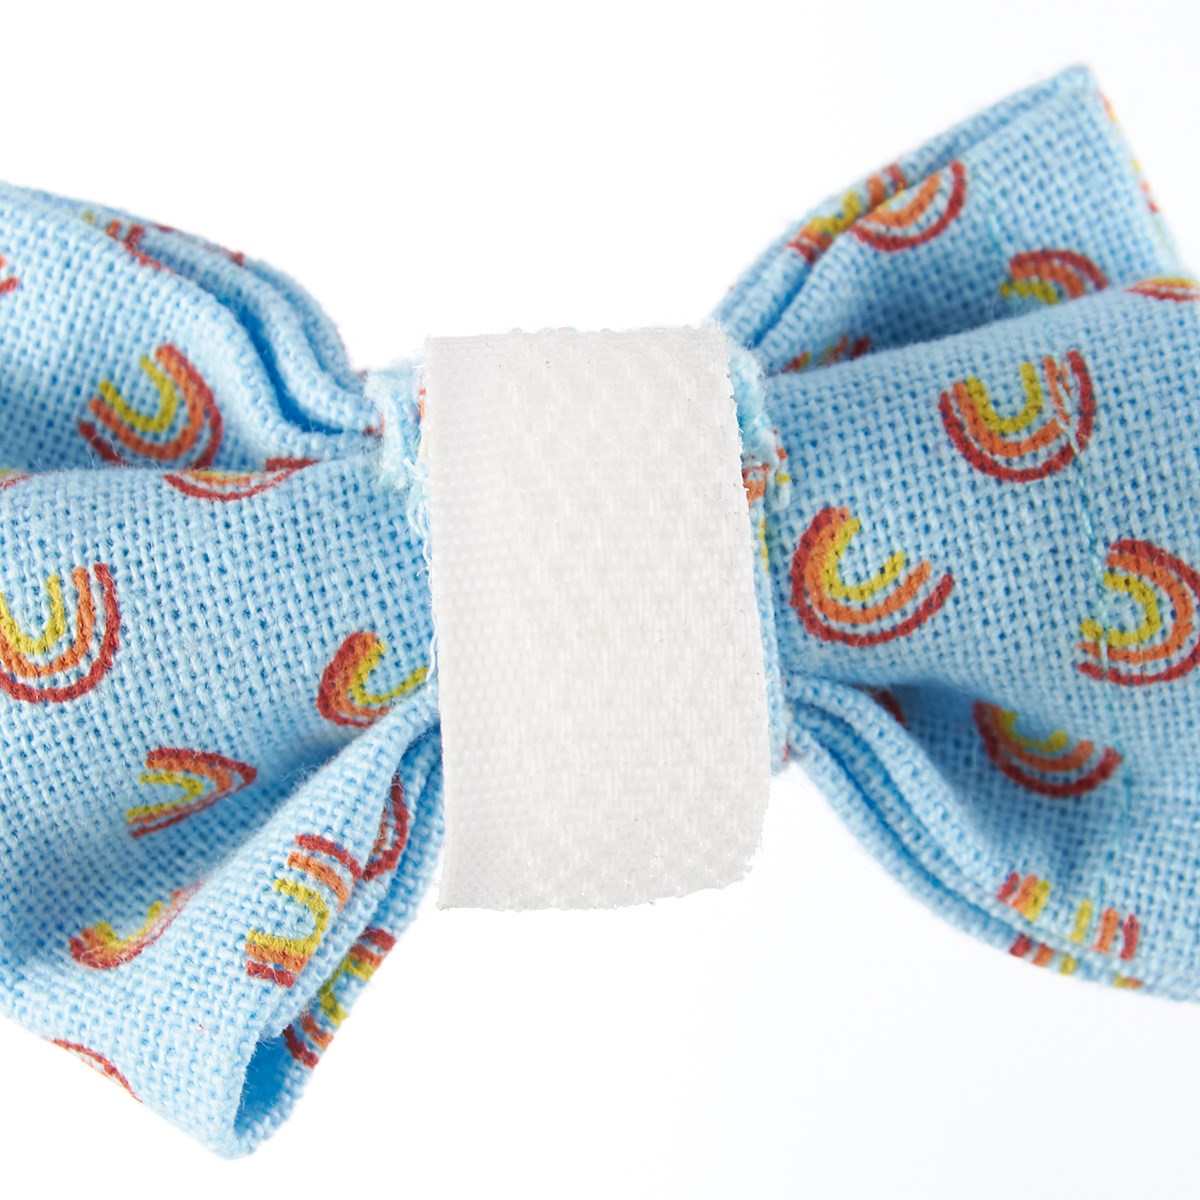 Rainbow Plaid Small Pet Bow Tie Set - Cotton, Hook-and-Loop Fastener